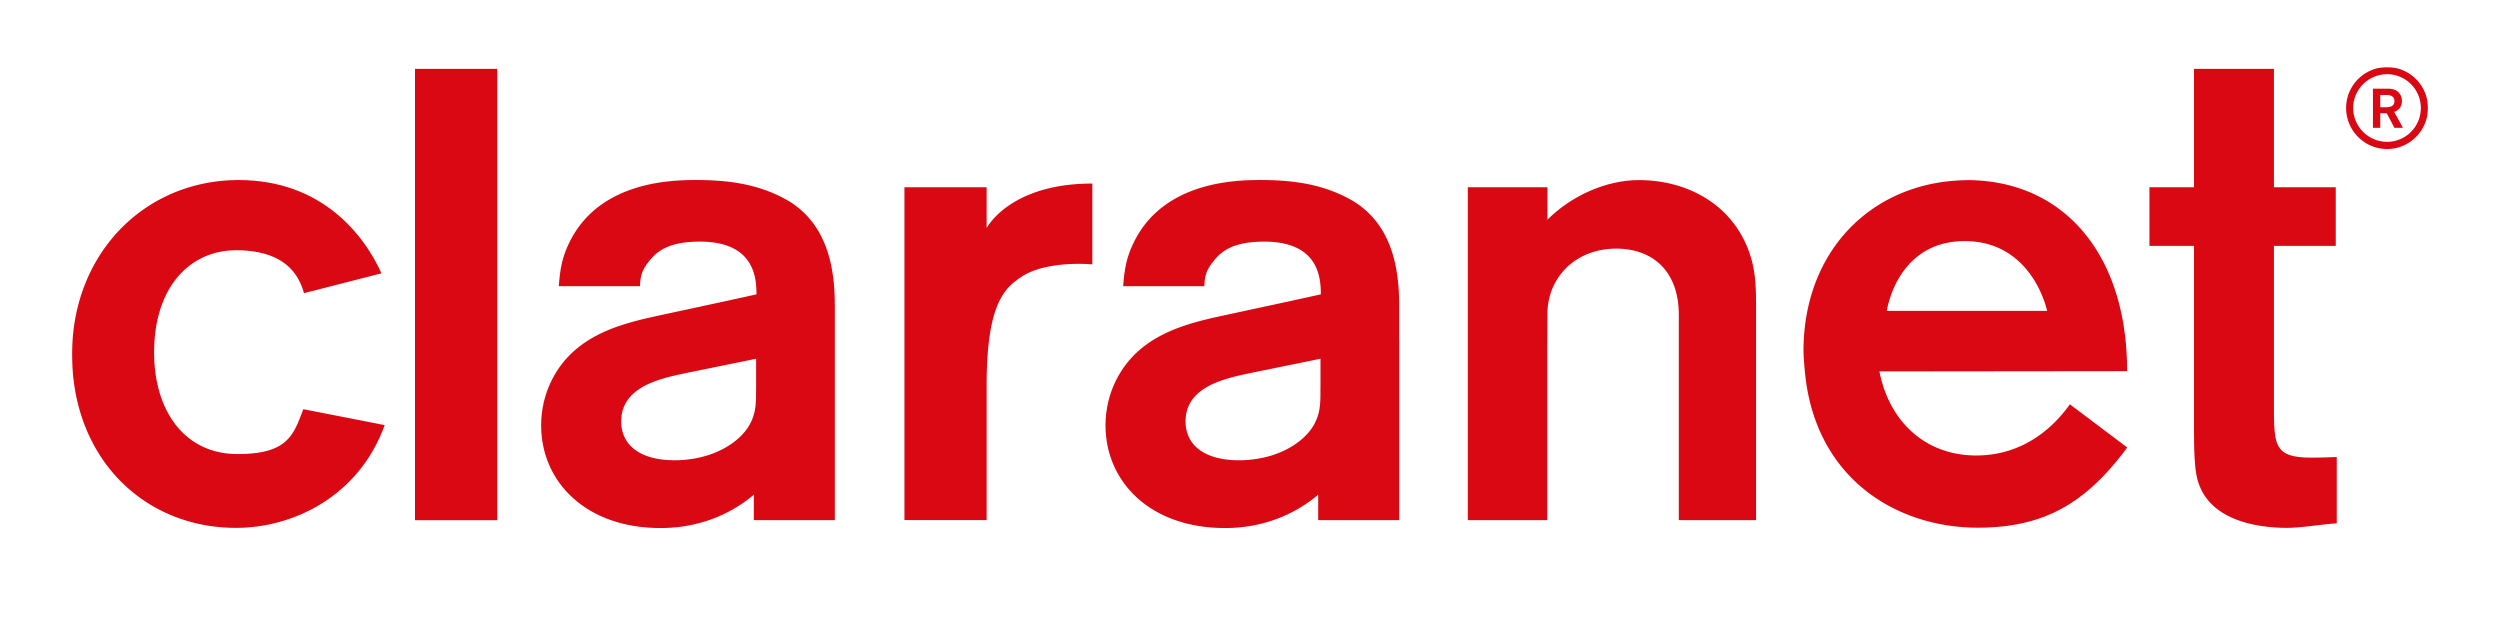 Claranet Logo